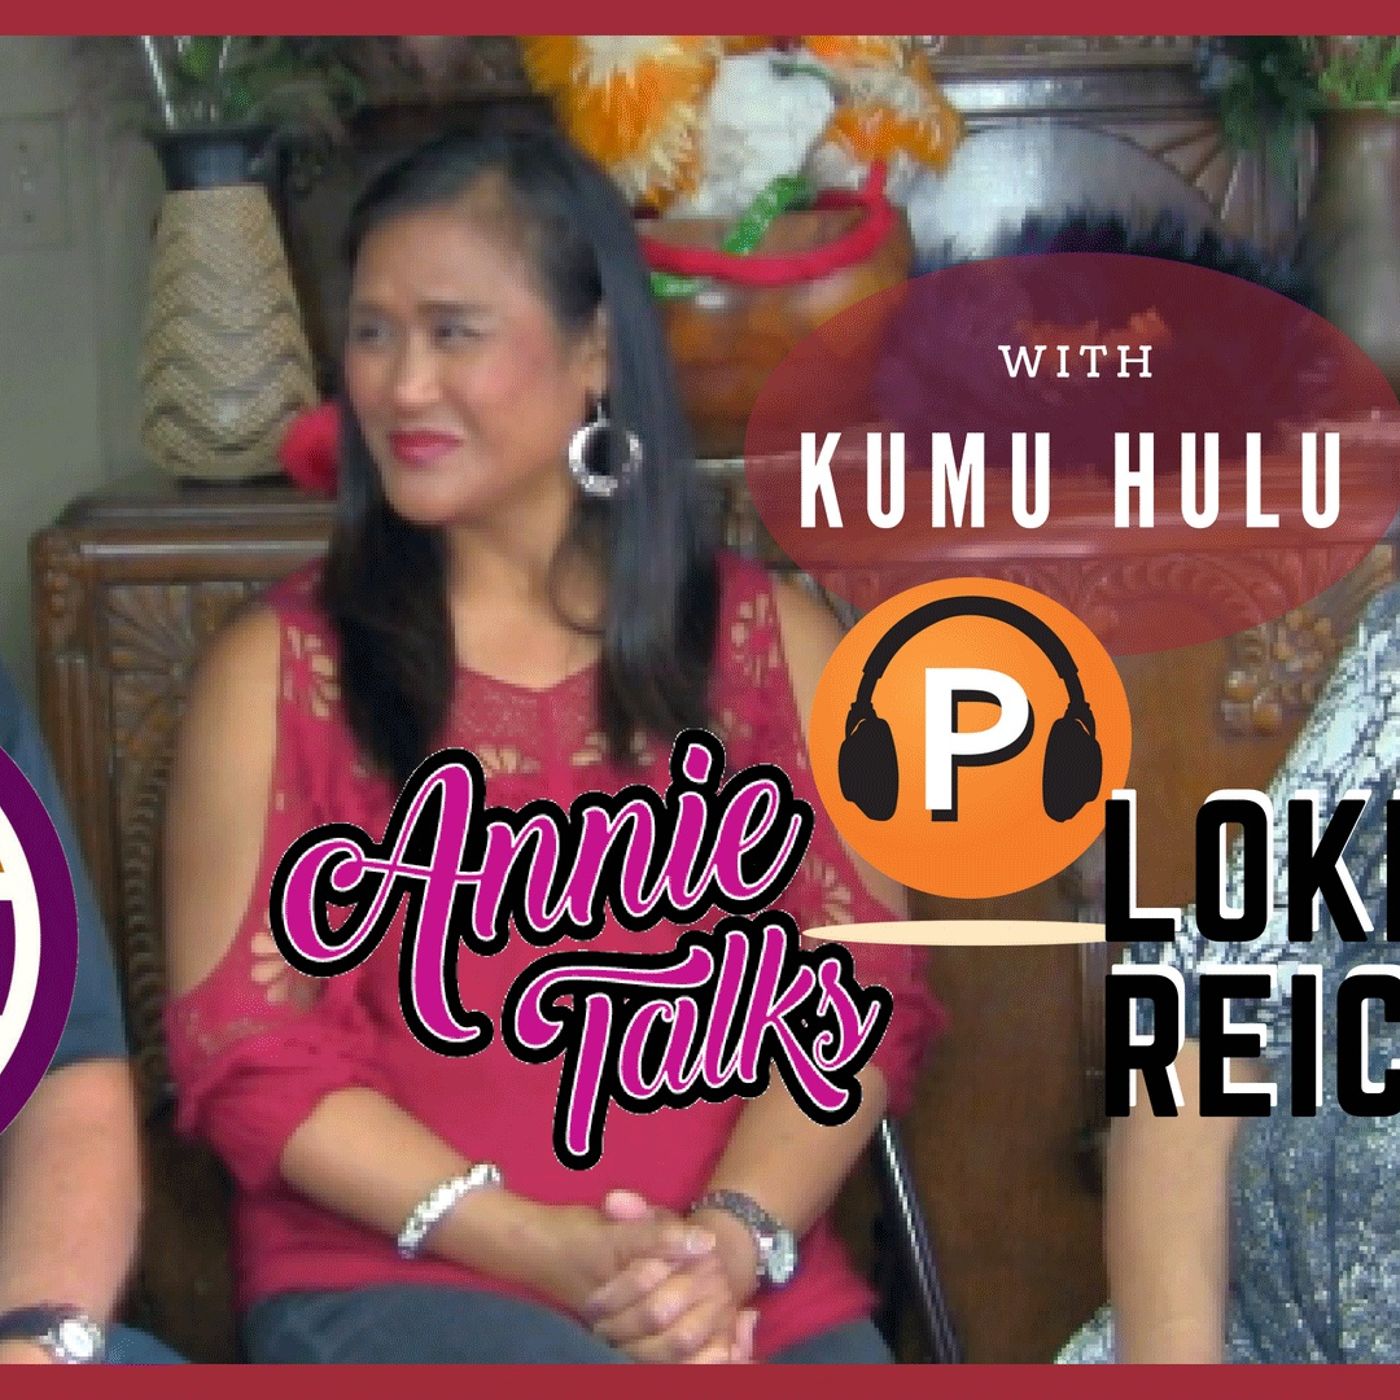 Episode 27 - Annie Talks and SIN Radio talk with Kumu Hulu Lokelani Reichert